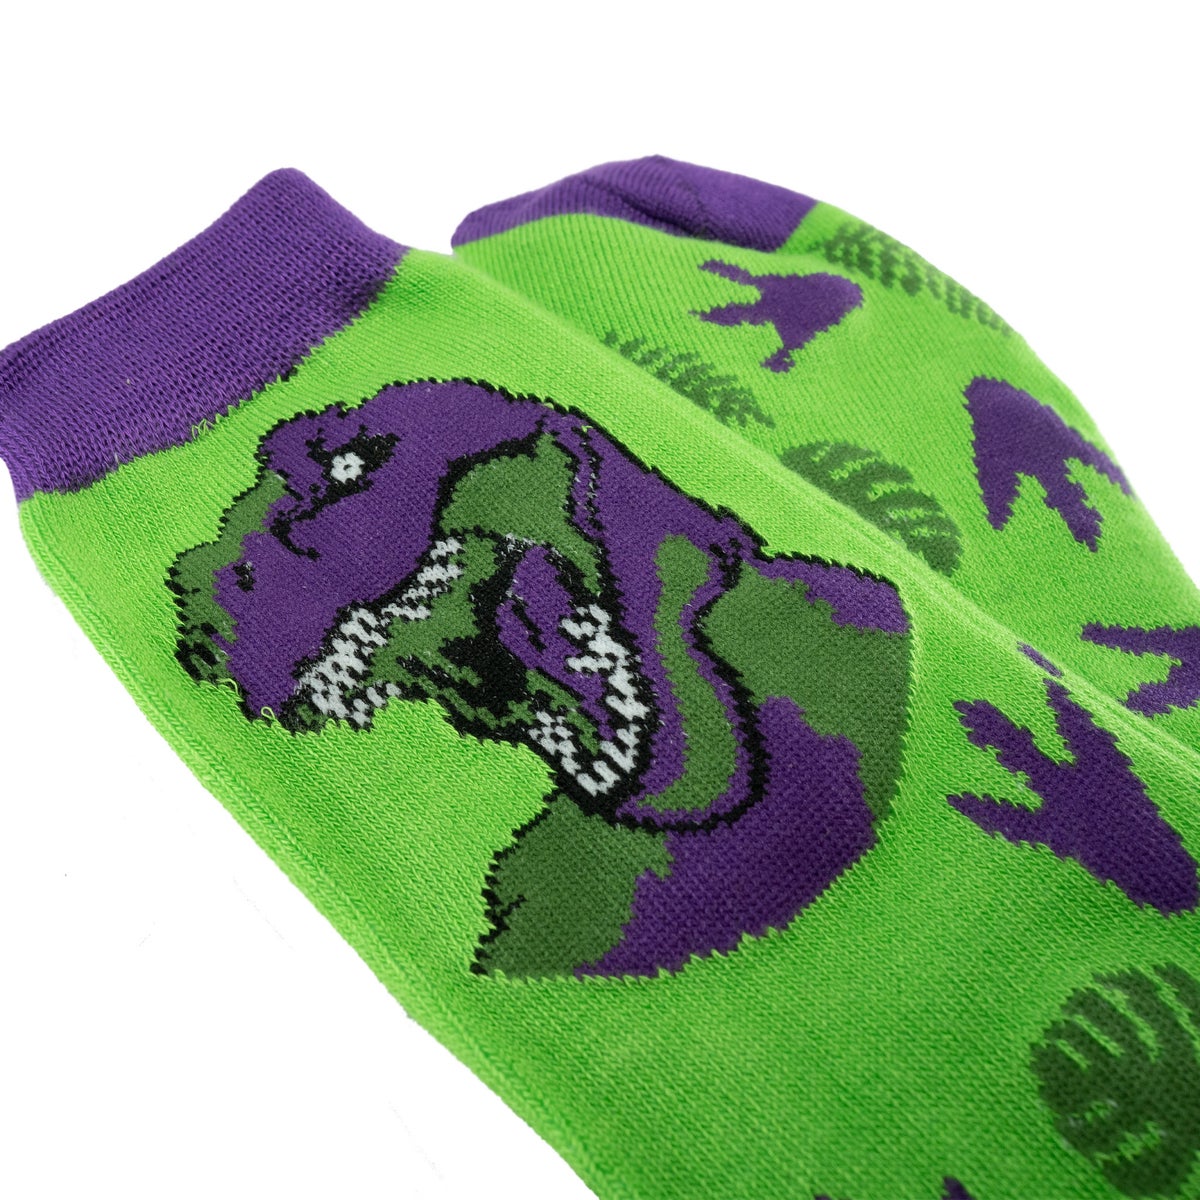 Socks-Dino-Green